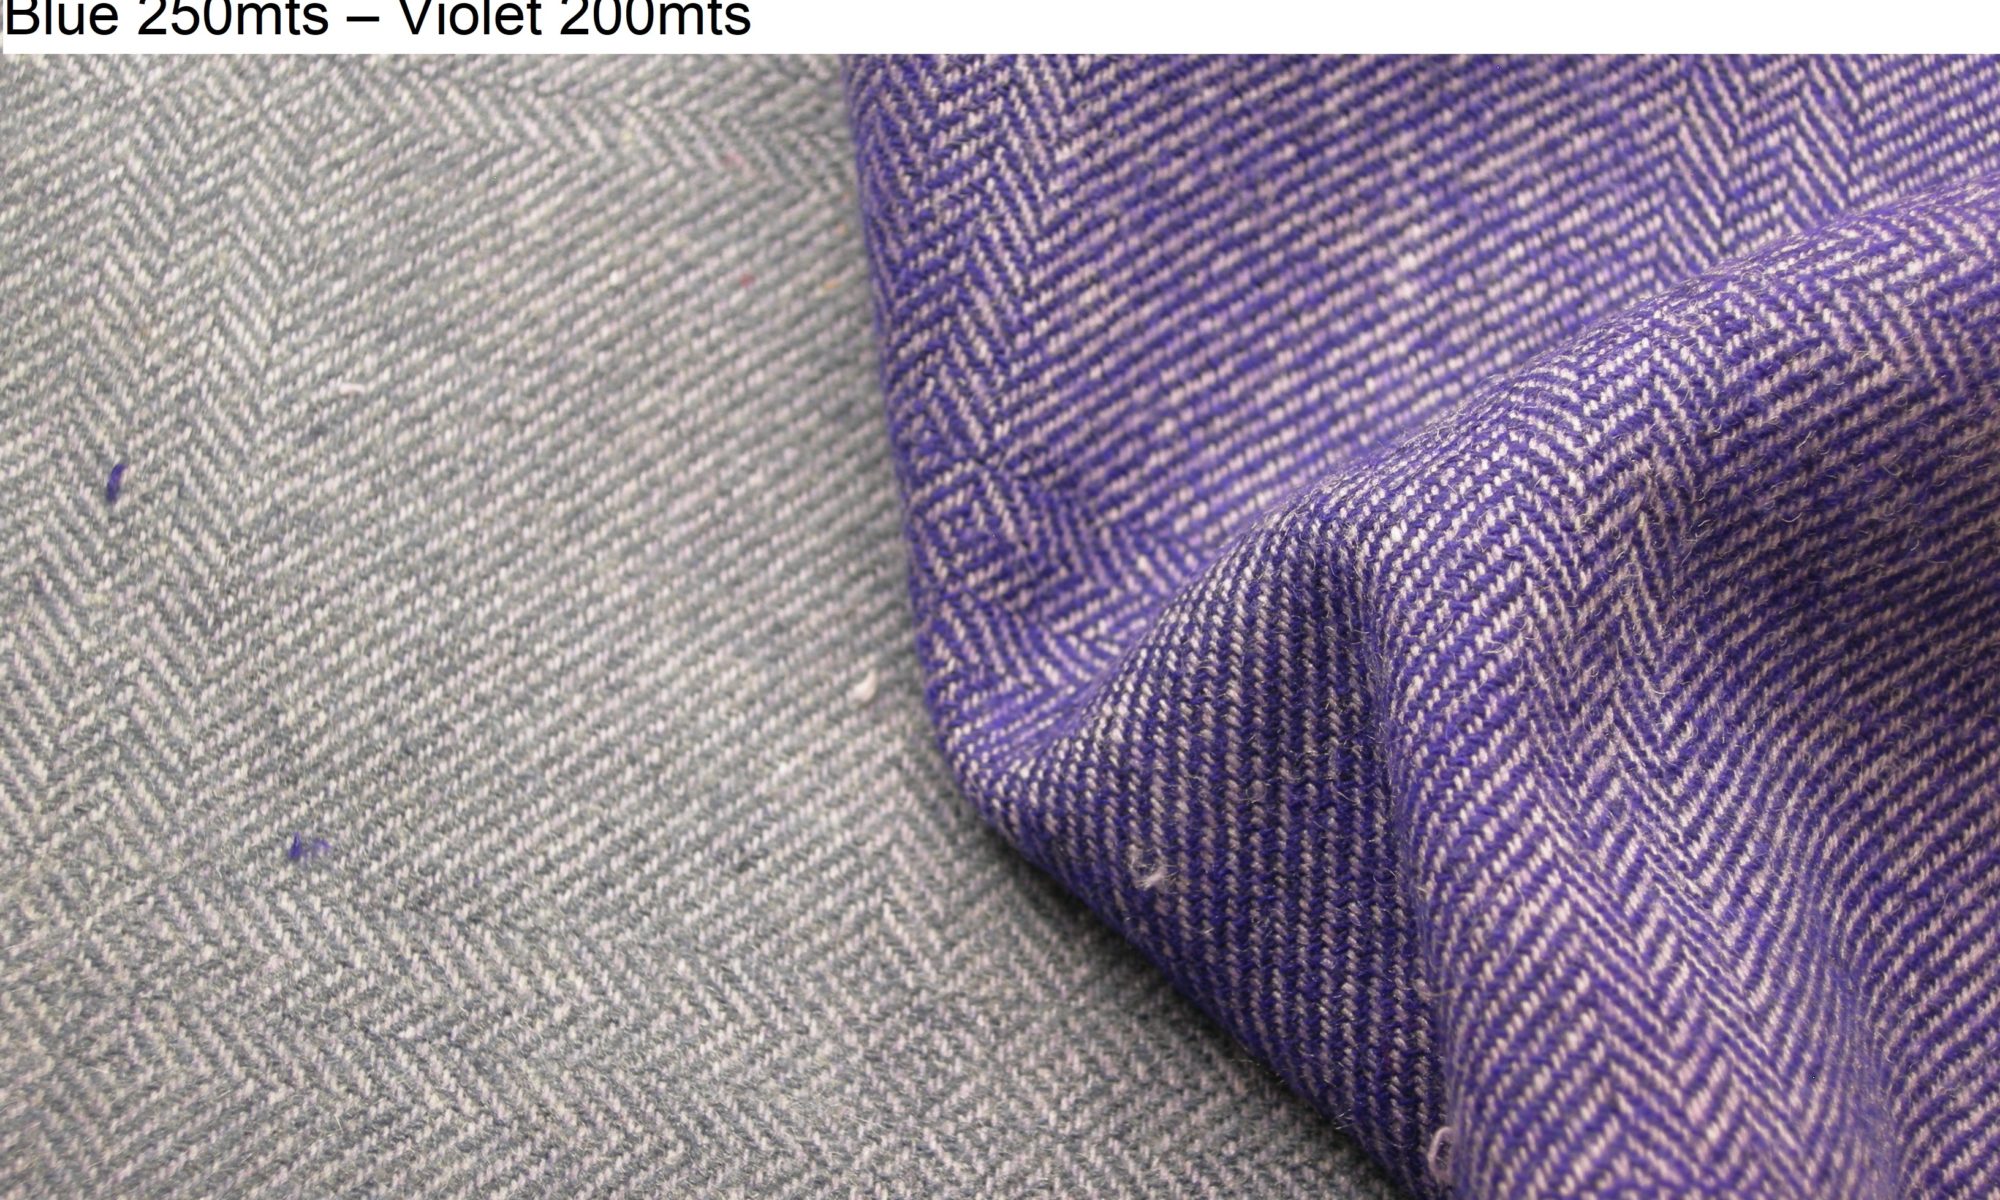 ART 7111 jacquard comfort stretch wool blend jacket fabric WIDTH cm140 WEIGHT gr300 COMPOSITION 39 polyester 30 viscose 30 wool 1 elastan - Blue 250mts – Violet 200mts